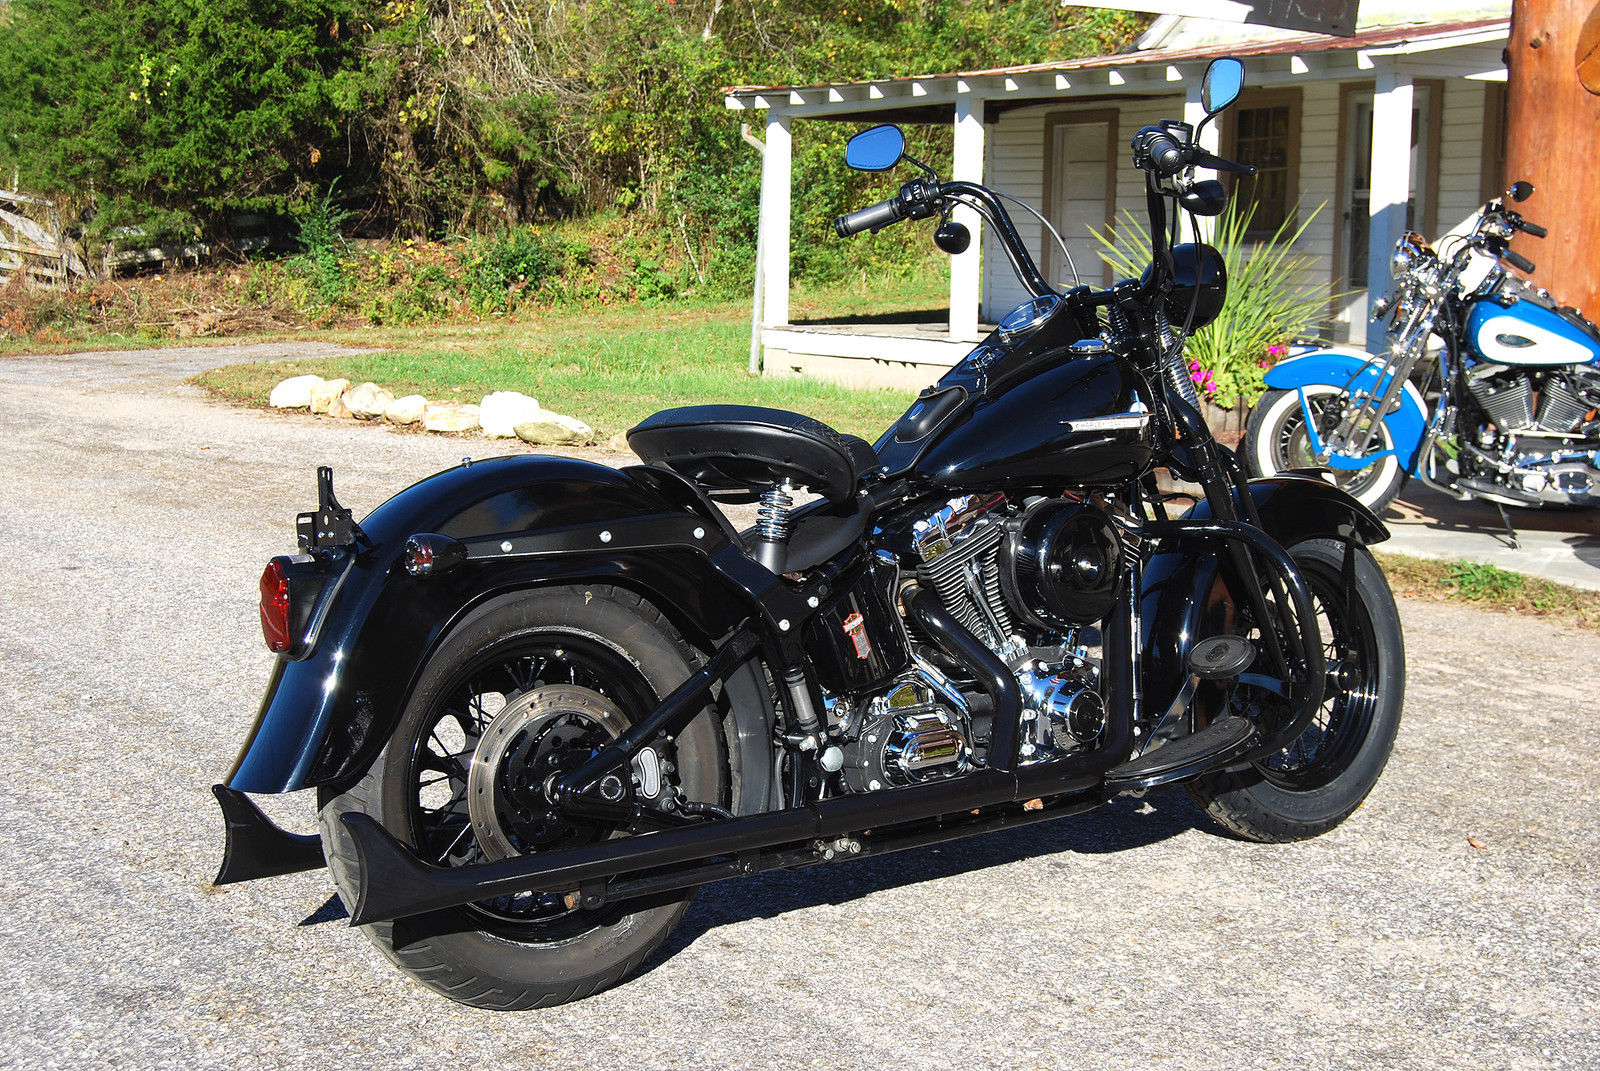 2006 Harley Softail Heritage Springer Classic Custom Black Bobber Old School